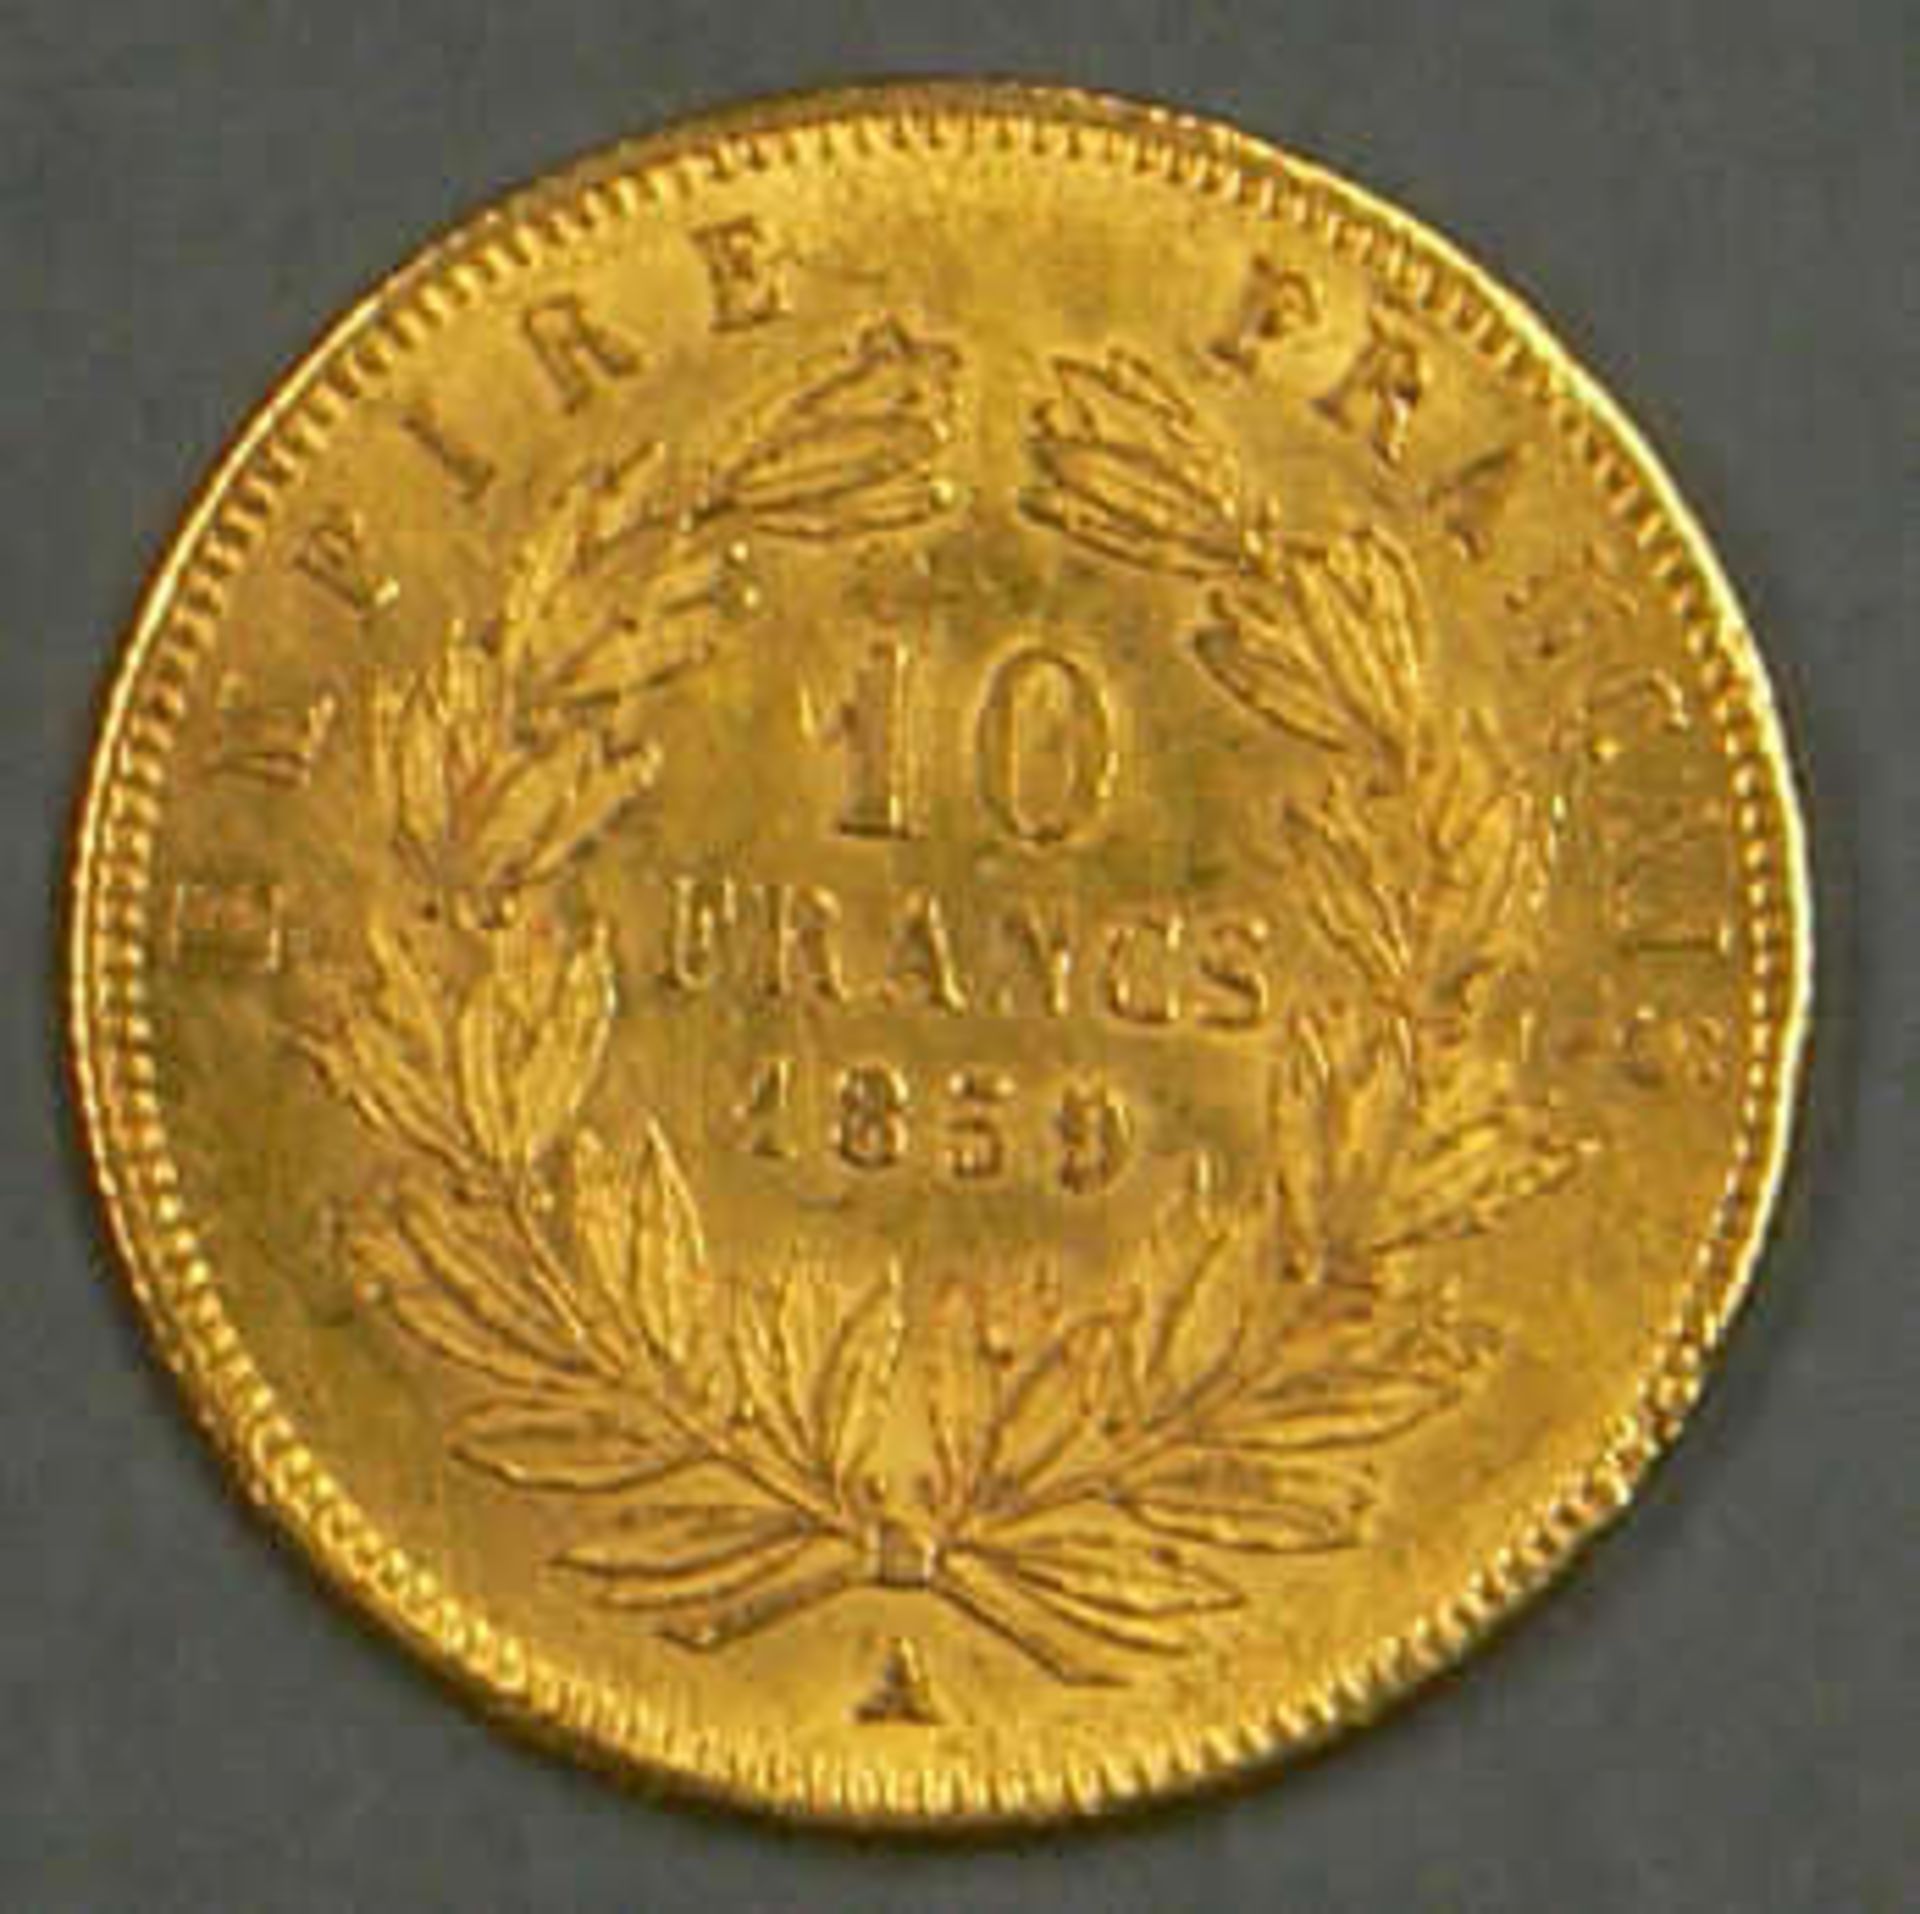 Frankreich 1859, 10.- Francs - Goldmünze. Gold 900. Gewicht: ca. 3,2 g. Erhaltung: vz. France